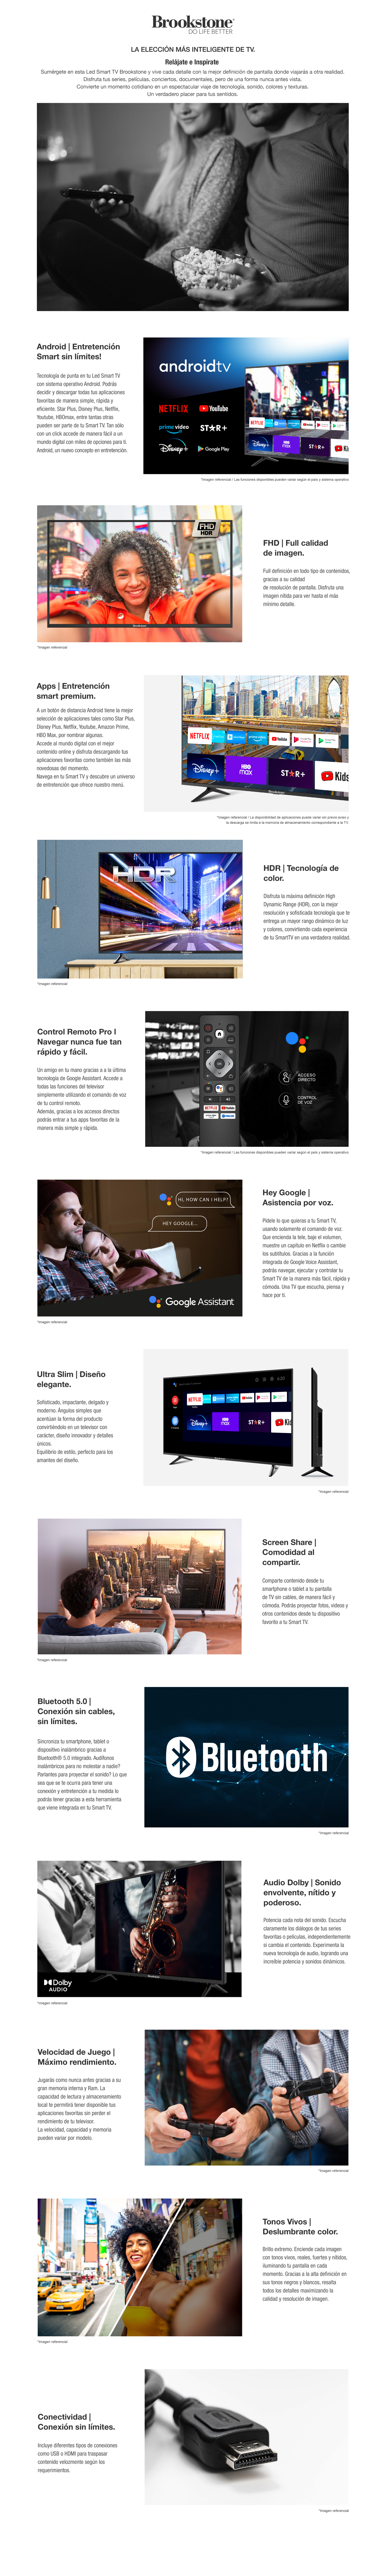 Brookstone Full HD Smart TV Android 42"